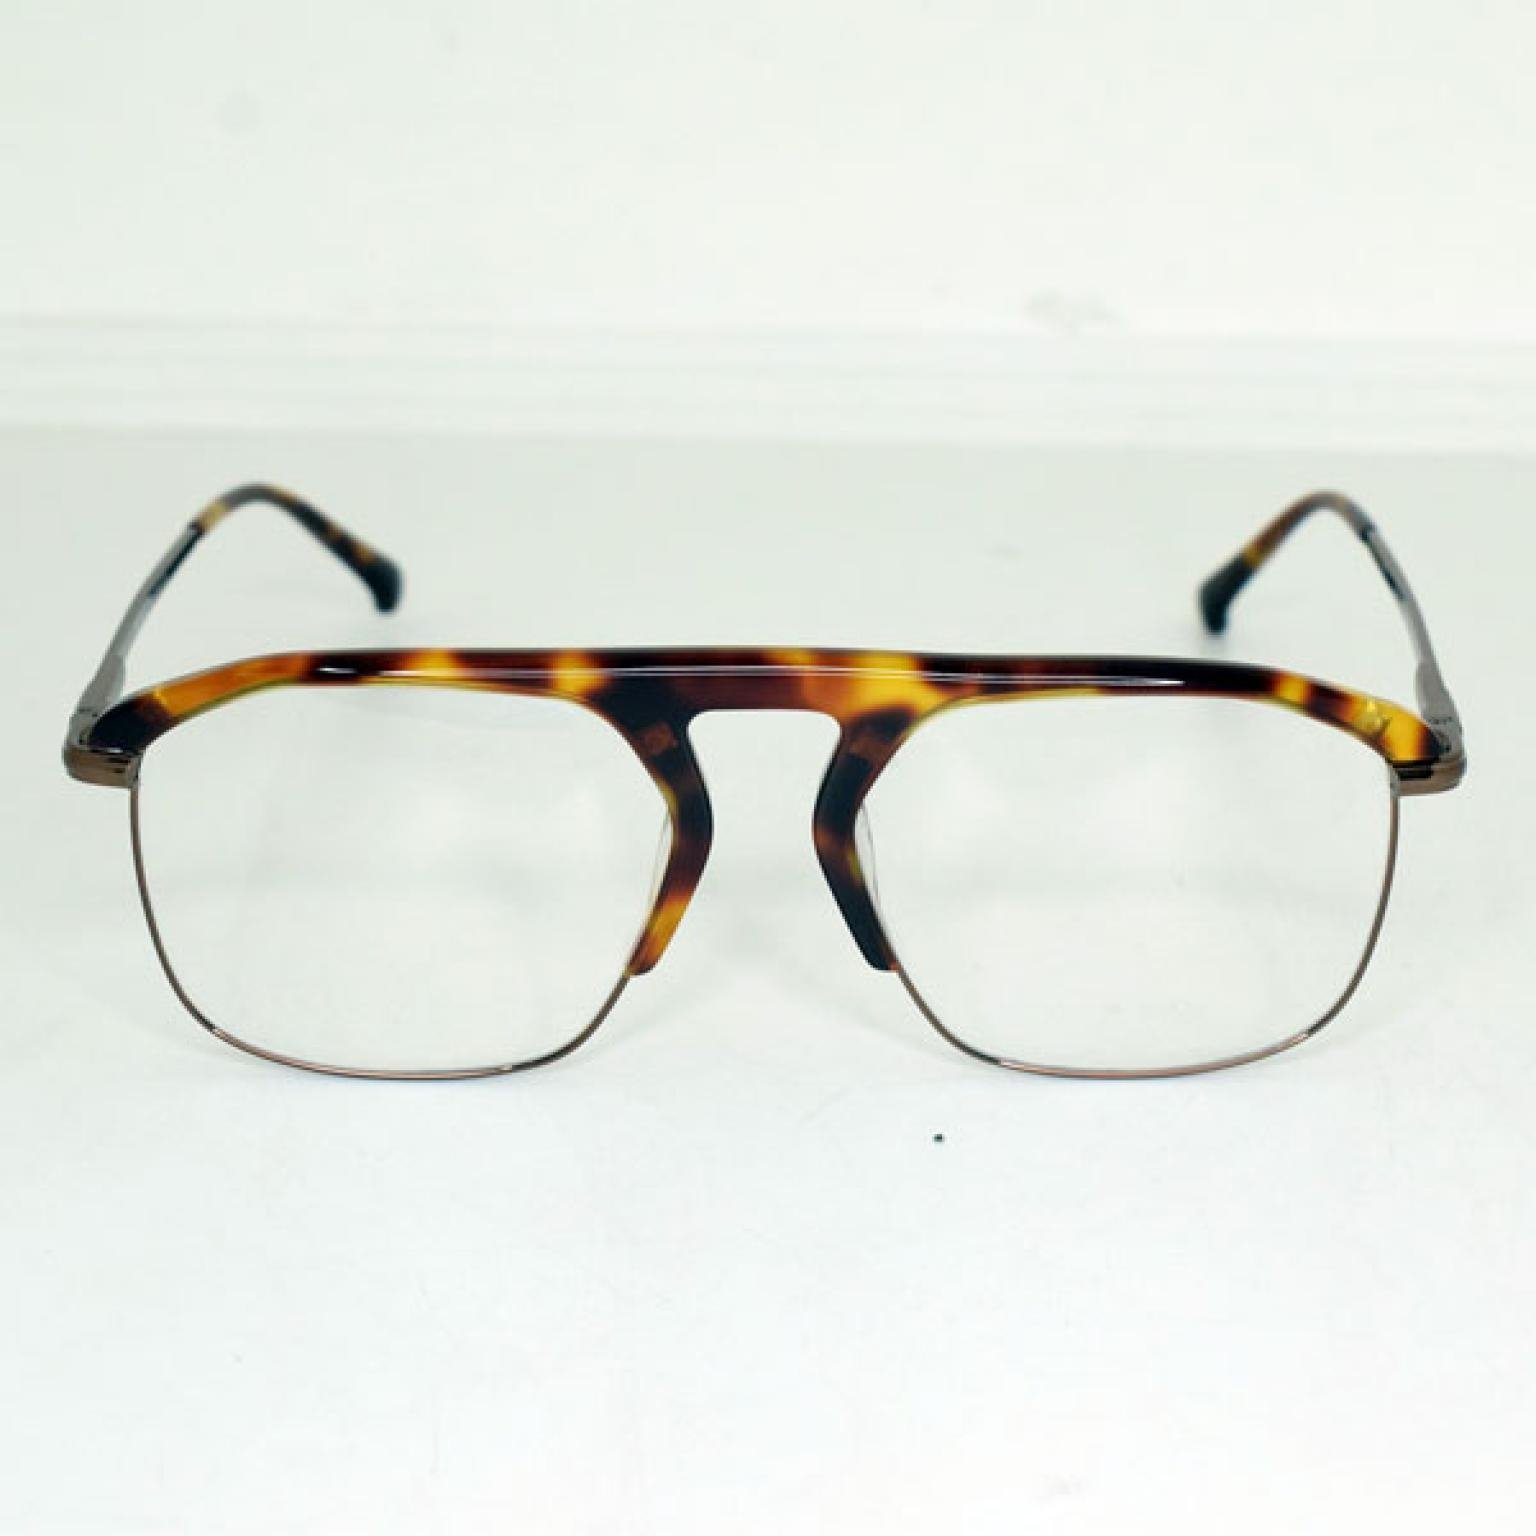 Classic design Tortoise Color Metal Optical Frame For Men Women Prescription Glasses